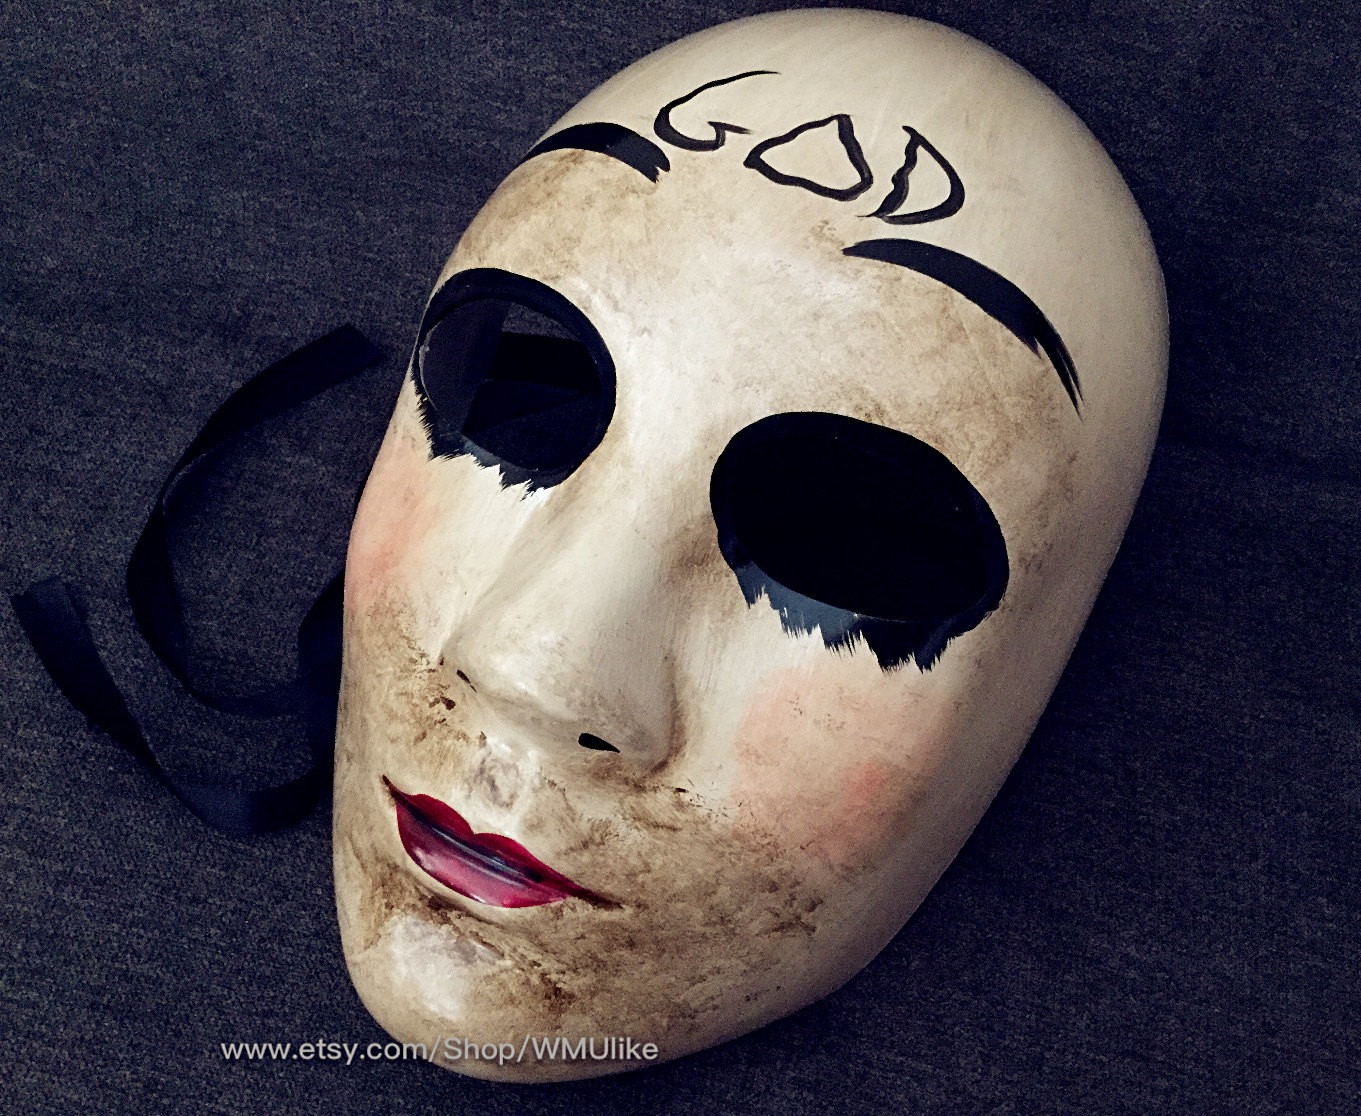 DIY Purge Mask
 The Purge Mask Halloween Costume uni full face Anarchy mask